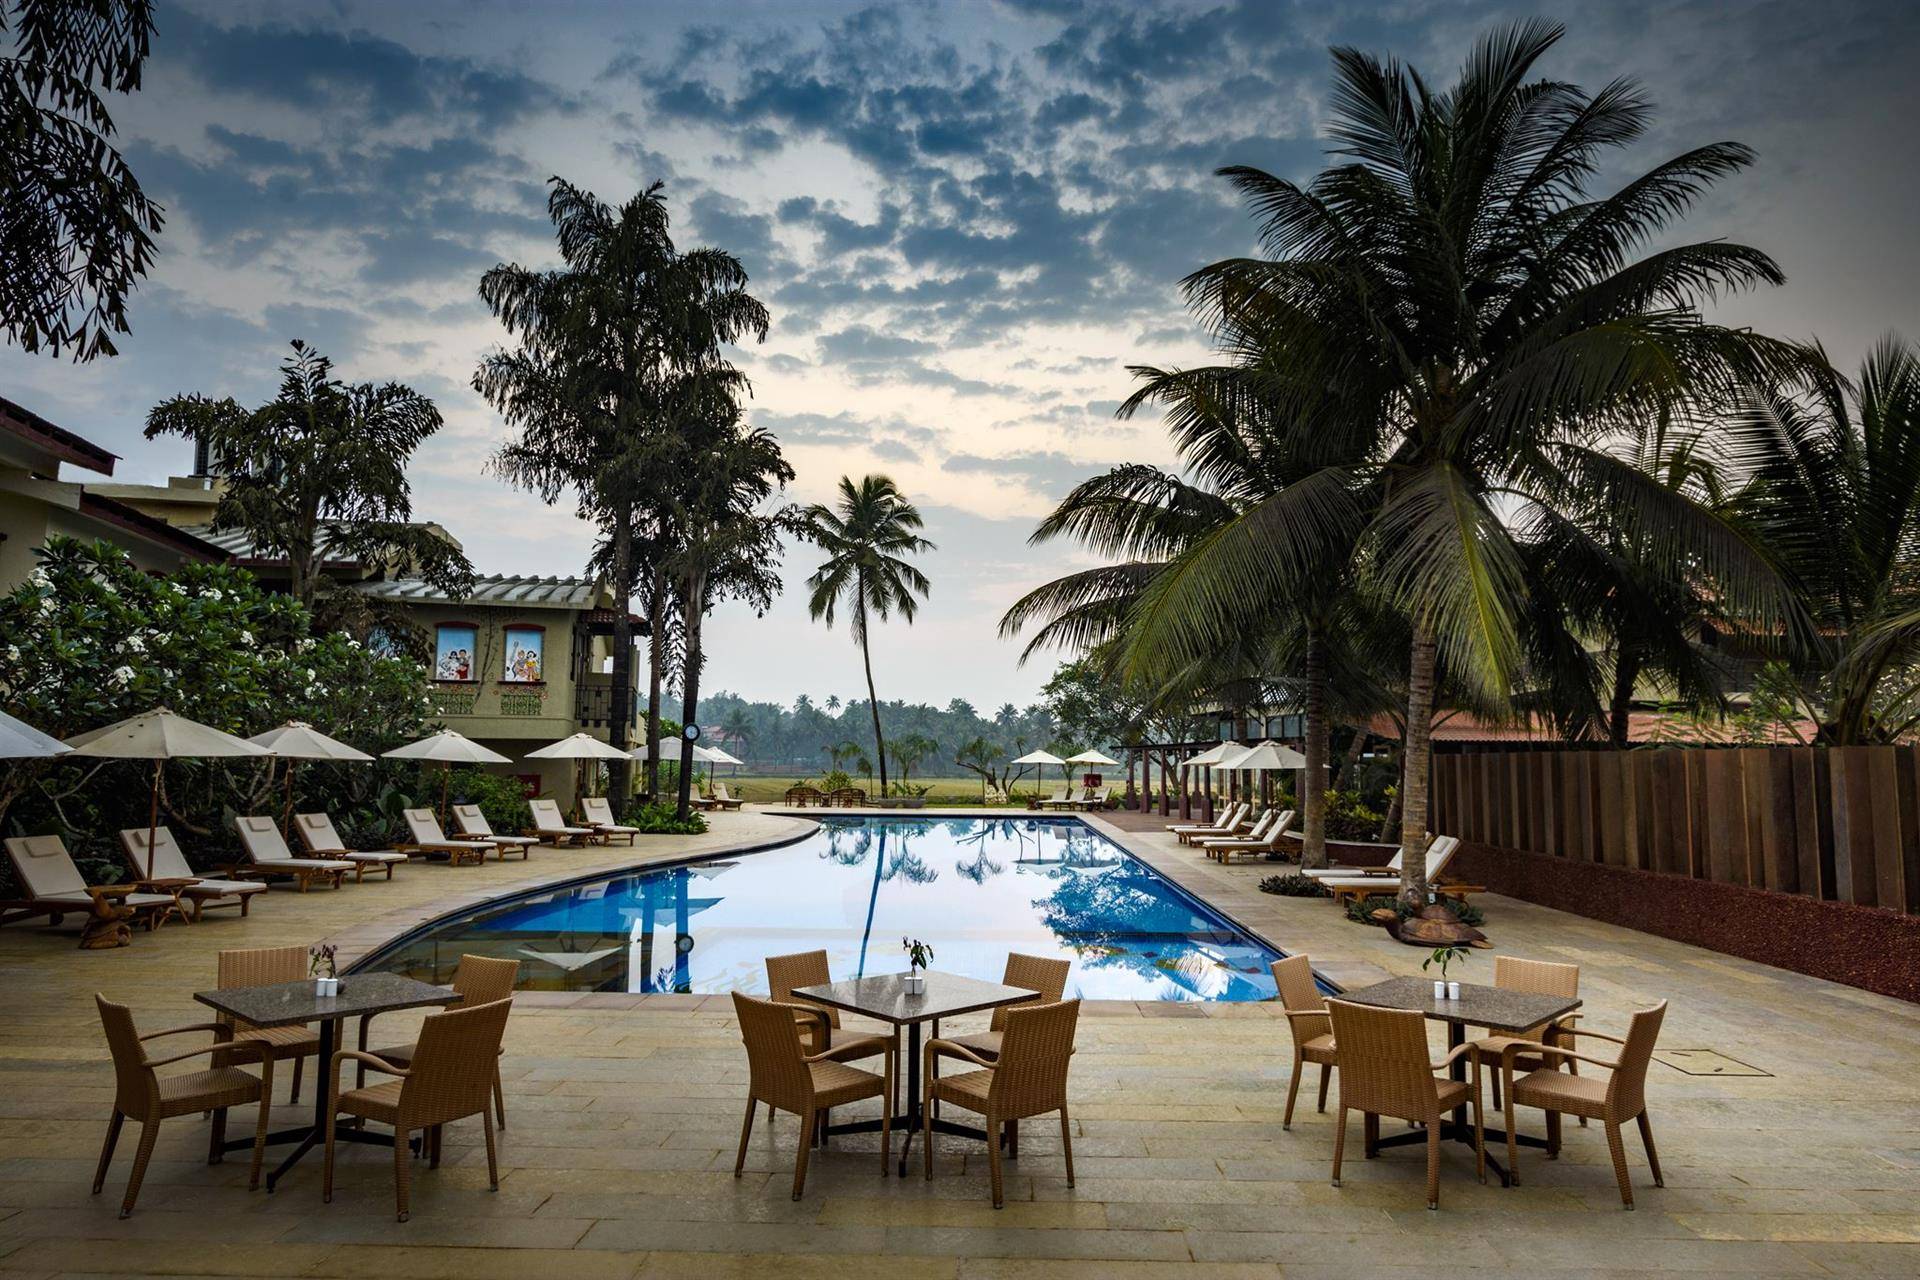 Beleza by the beach hotel in goa, india